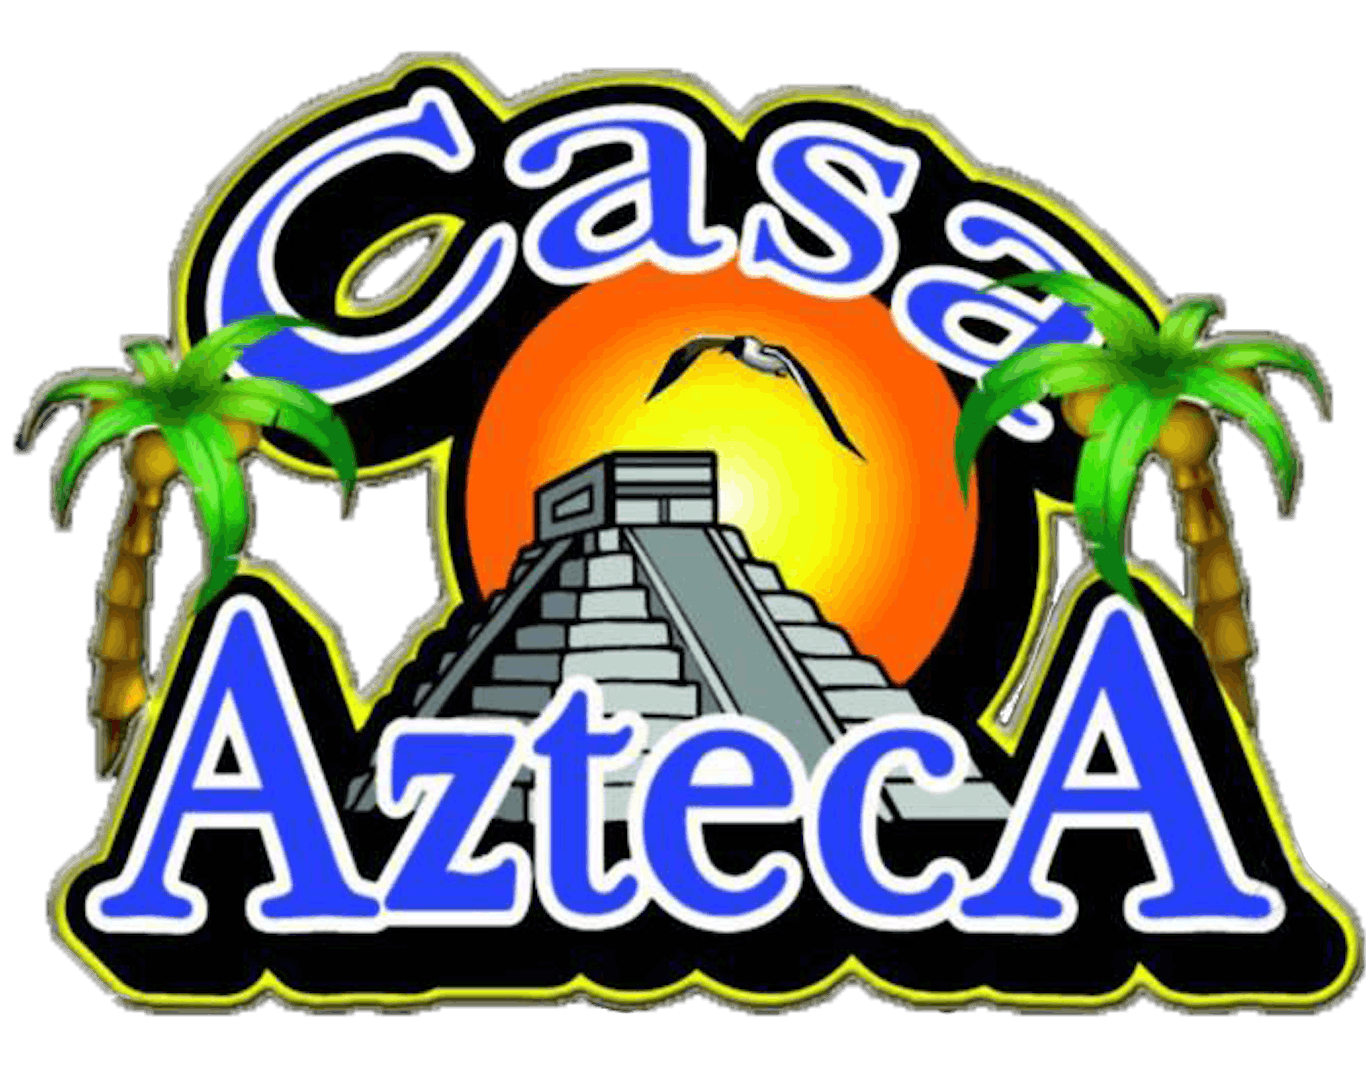 Casa Azteca Mexican Restaurants